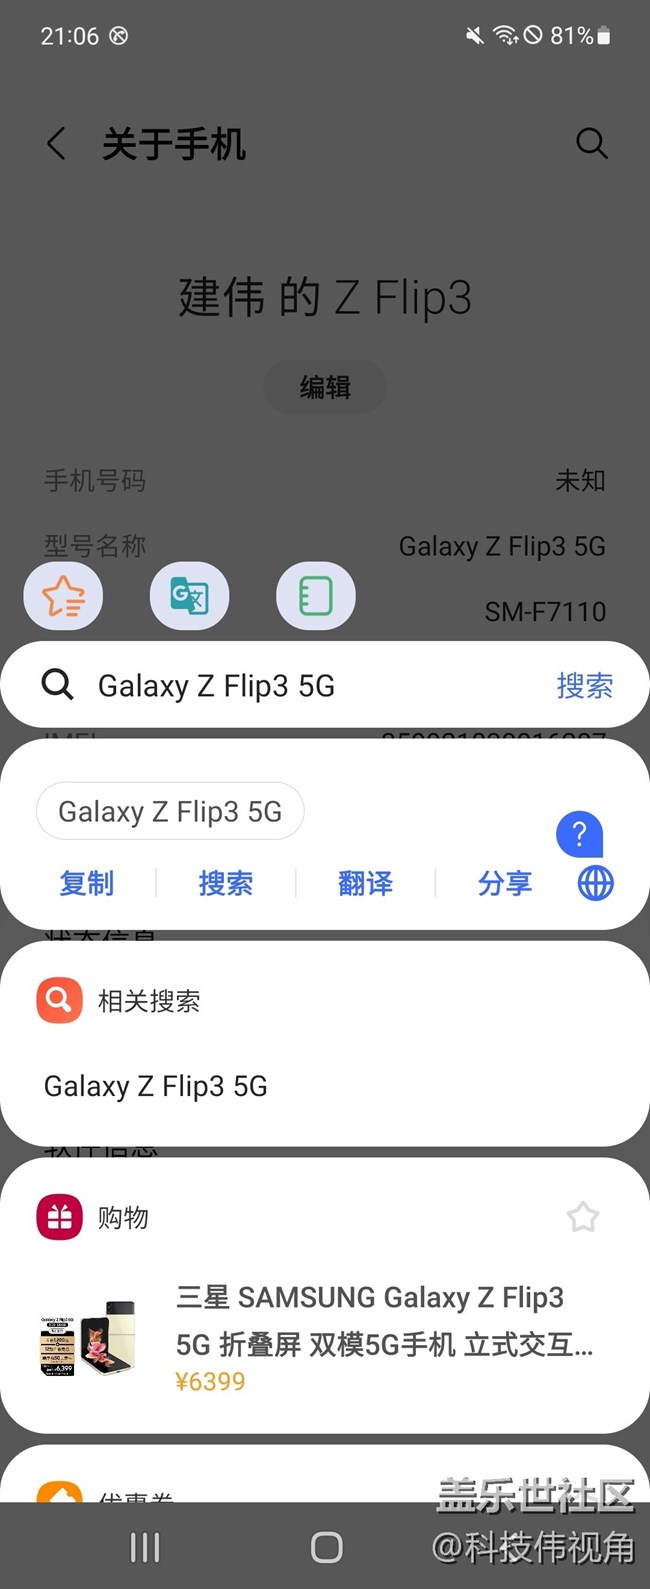 Galaxy Z Flip3 5G的迷你助手真不错